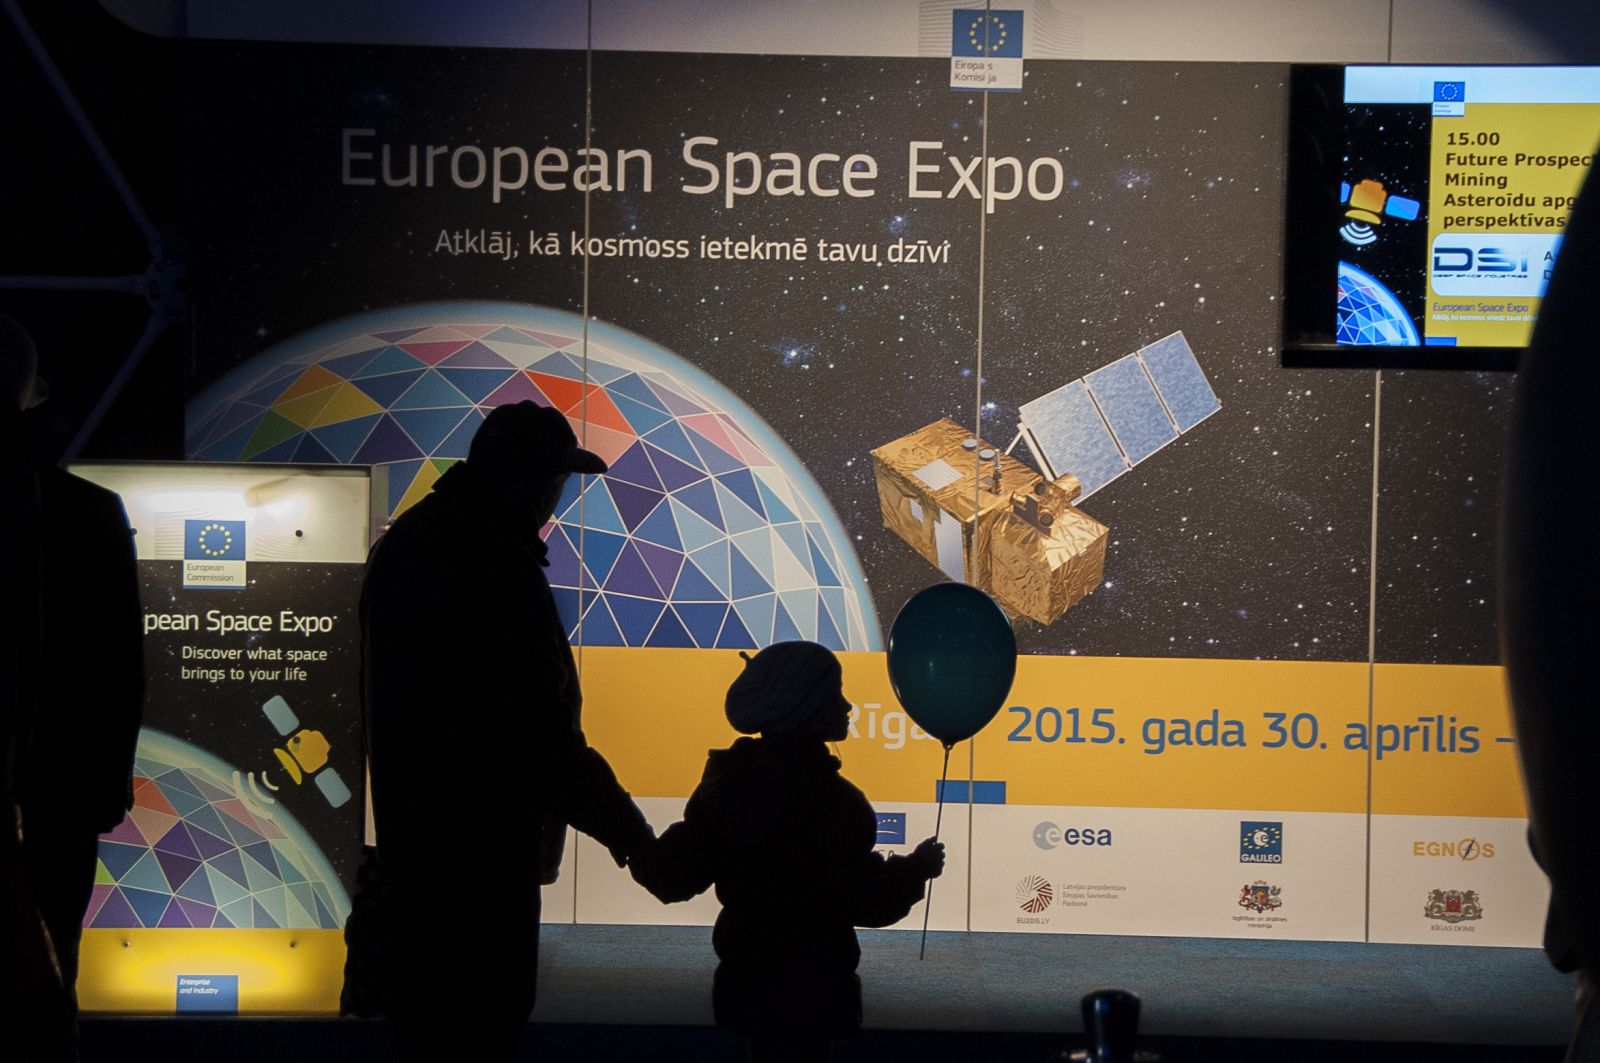 European Space Expo exhibition in Ekspanade